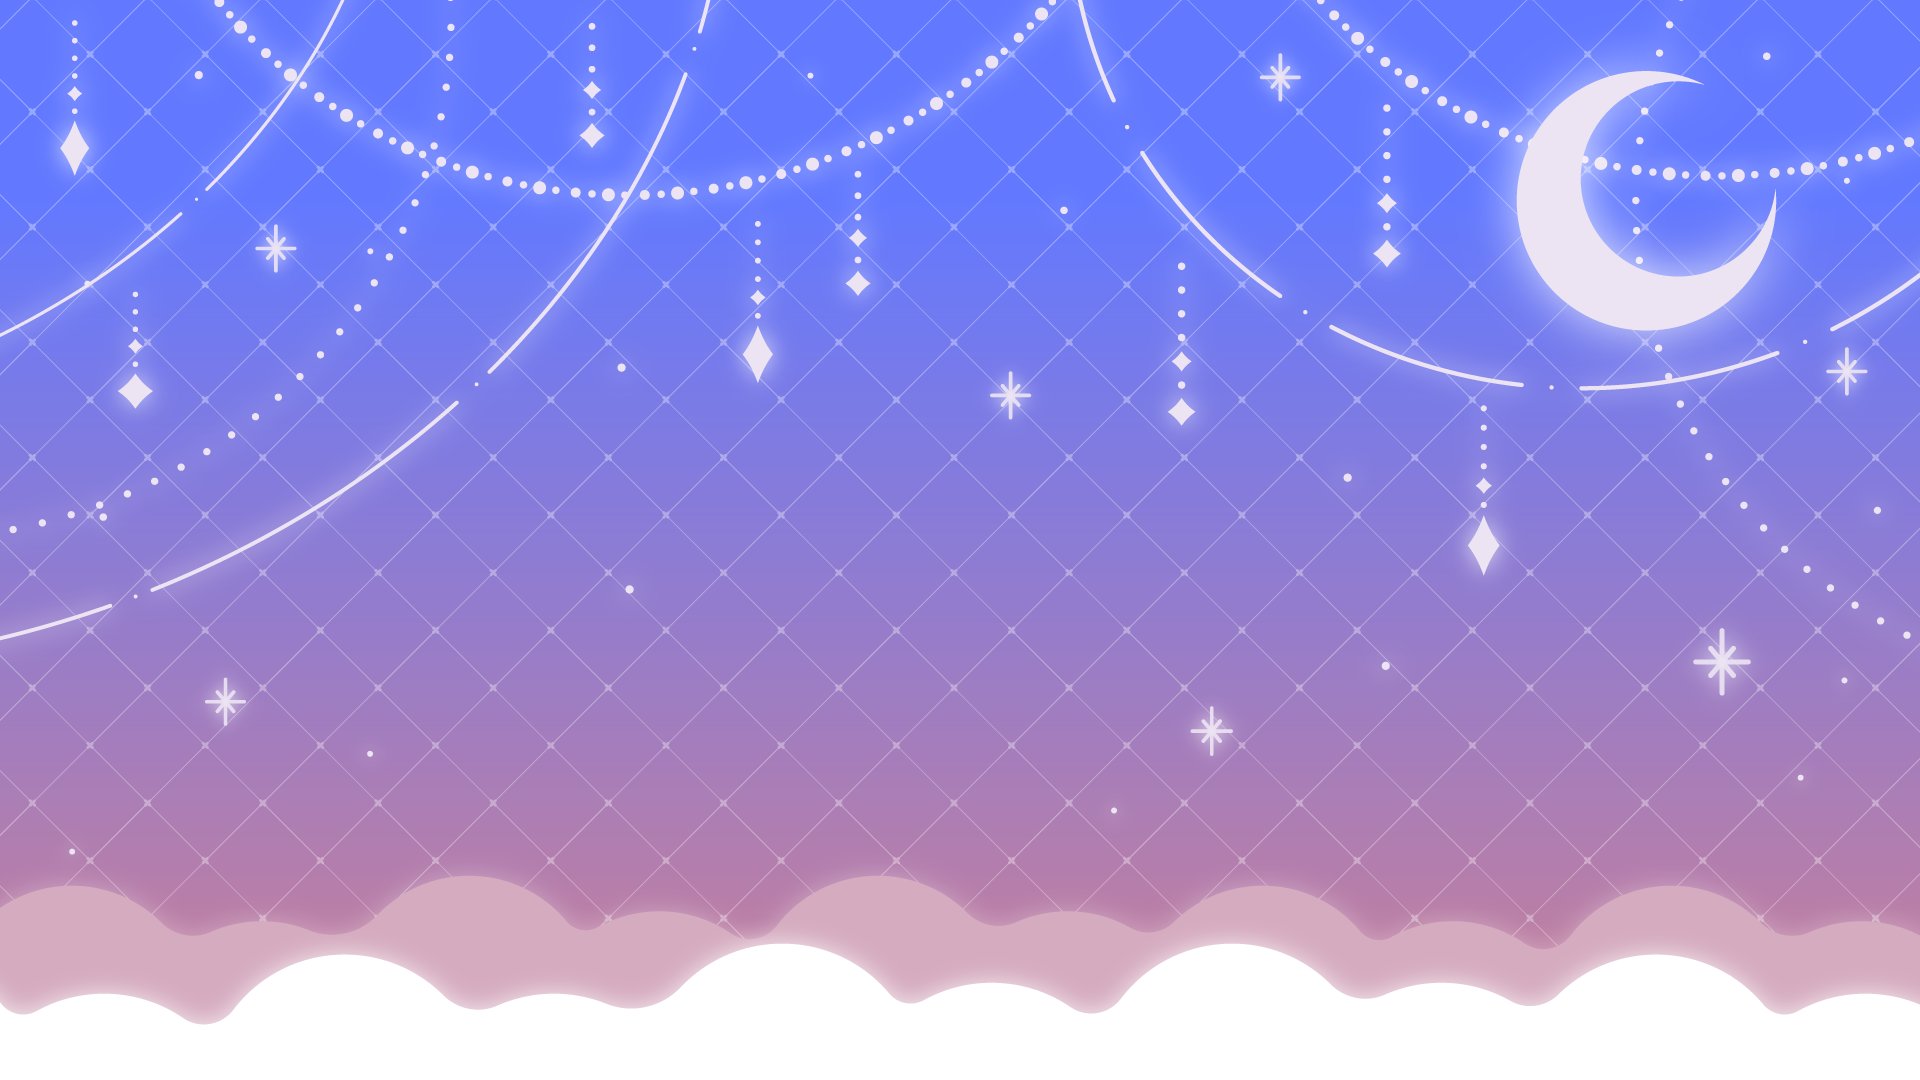 Twitter 上的 Okumono 背景 動画フリー素材 New 幻想的な月と空の背景 8種 T Co Dvetuub5w2 幻想的 ファンタジー 空な背景デザイン素材です 夕焼けや夜空をイメージした綺麗なグラデーション Okumono フリー素材 Vtuber T Co